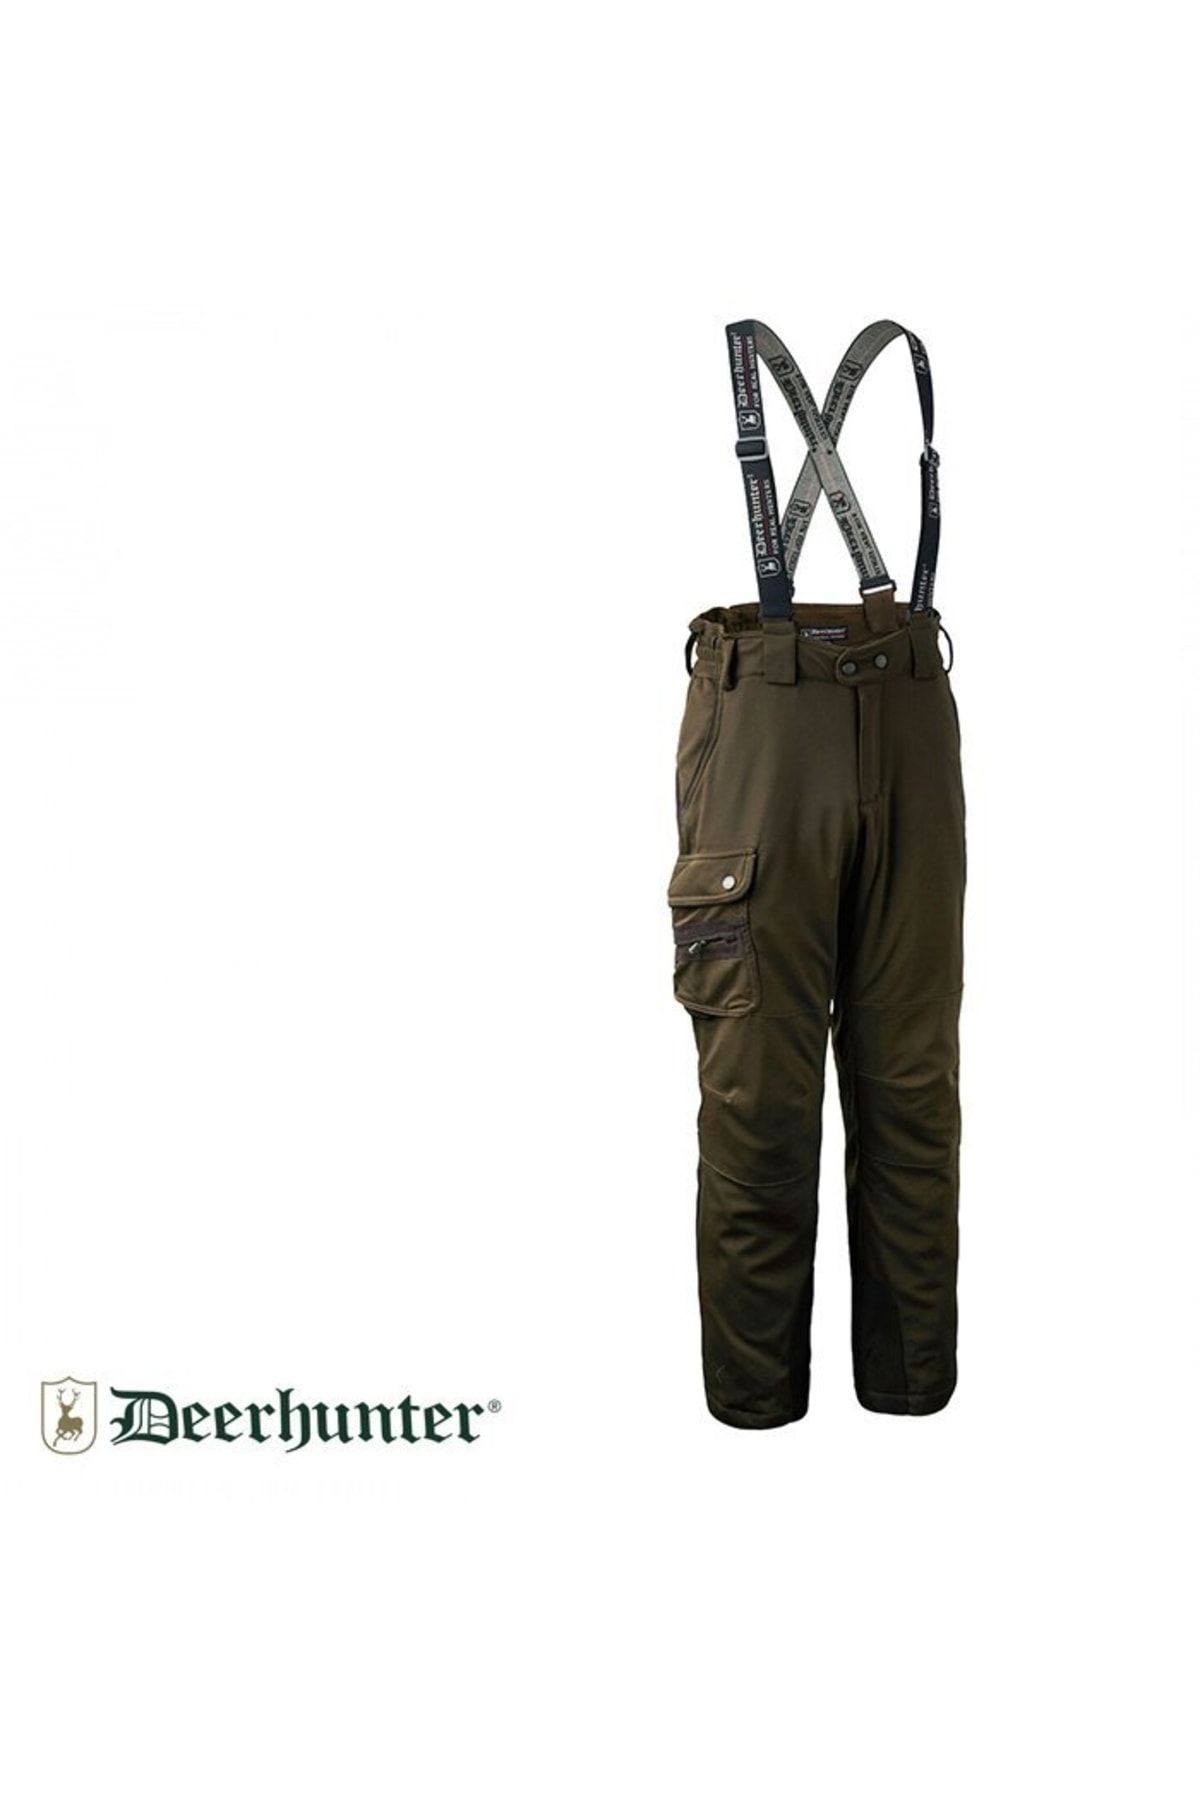 Deerhunter Muflon Deer-tex 376 Yeşil Pantolon 56